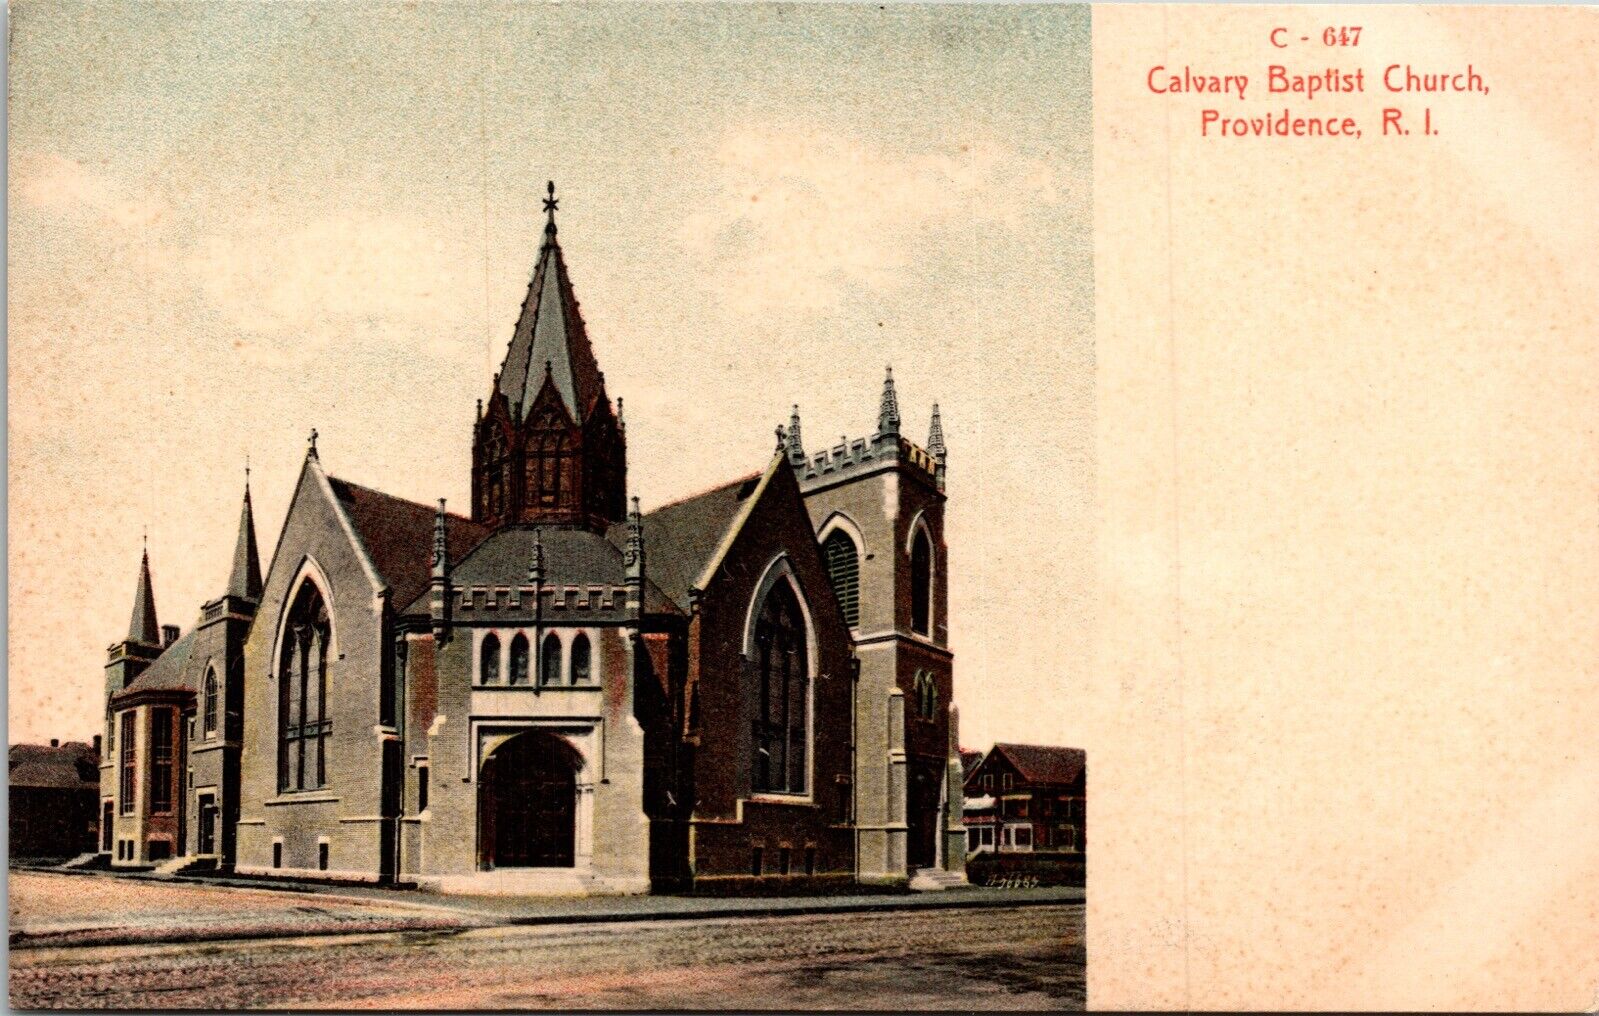 C - 647 Calvary Baptist Church, Providence, R. I.